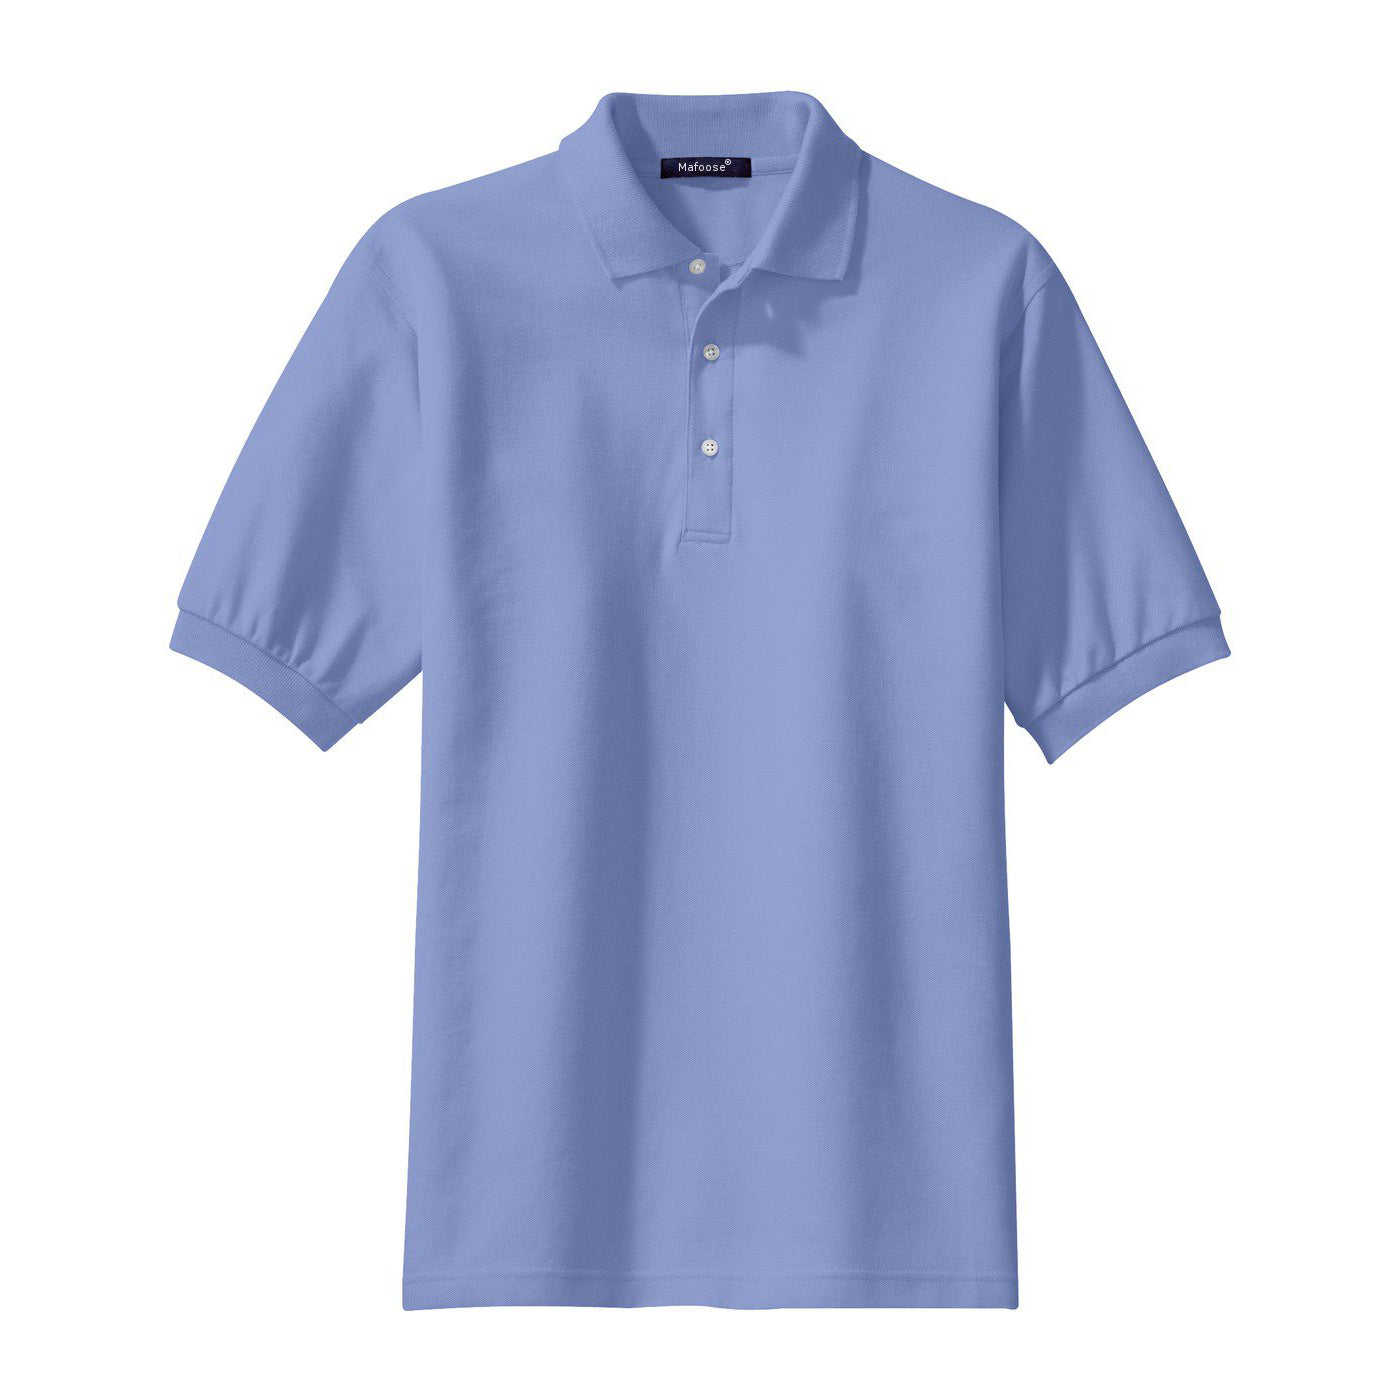 Mafoose Men's 100% Pima Cotton Polo Shirt Blueberry-Front